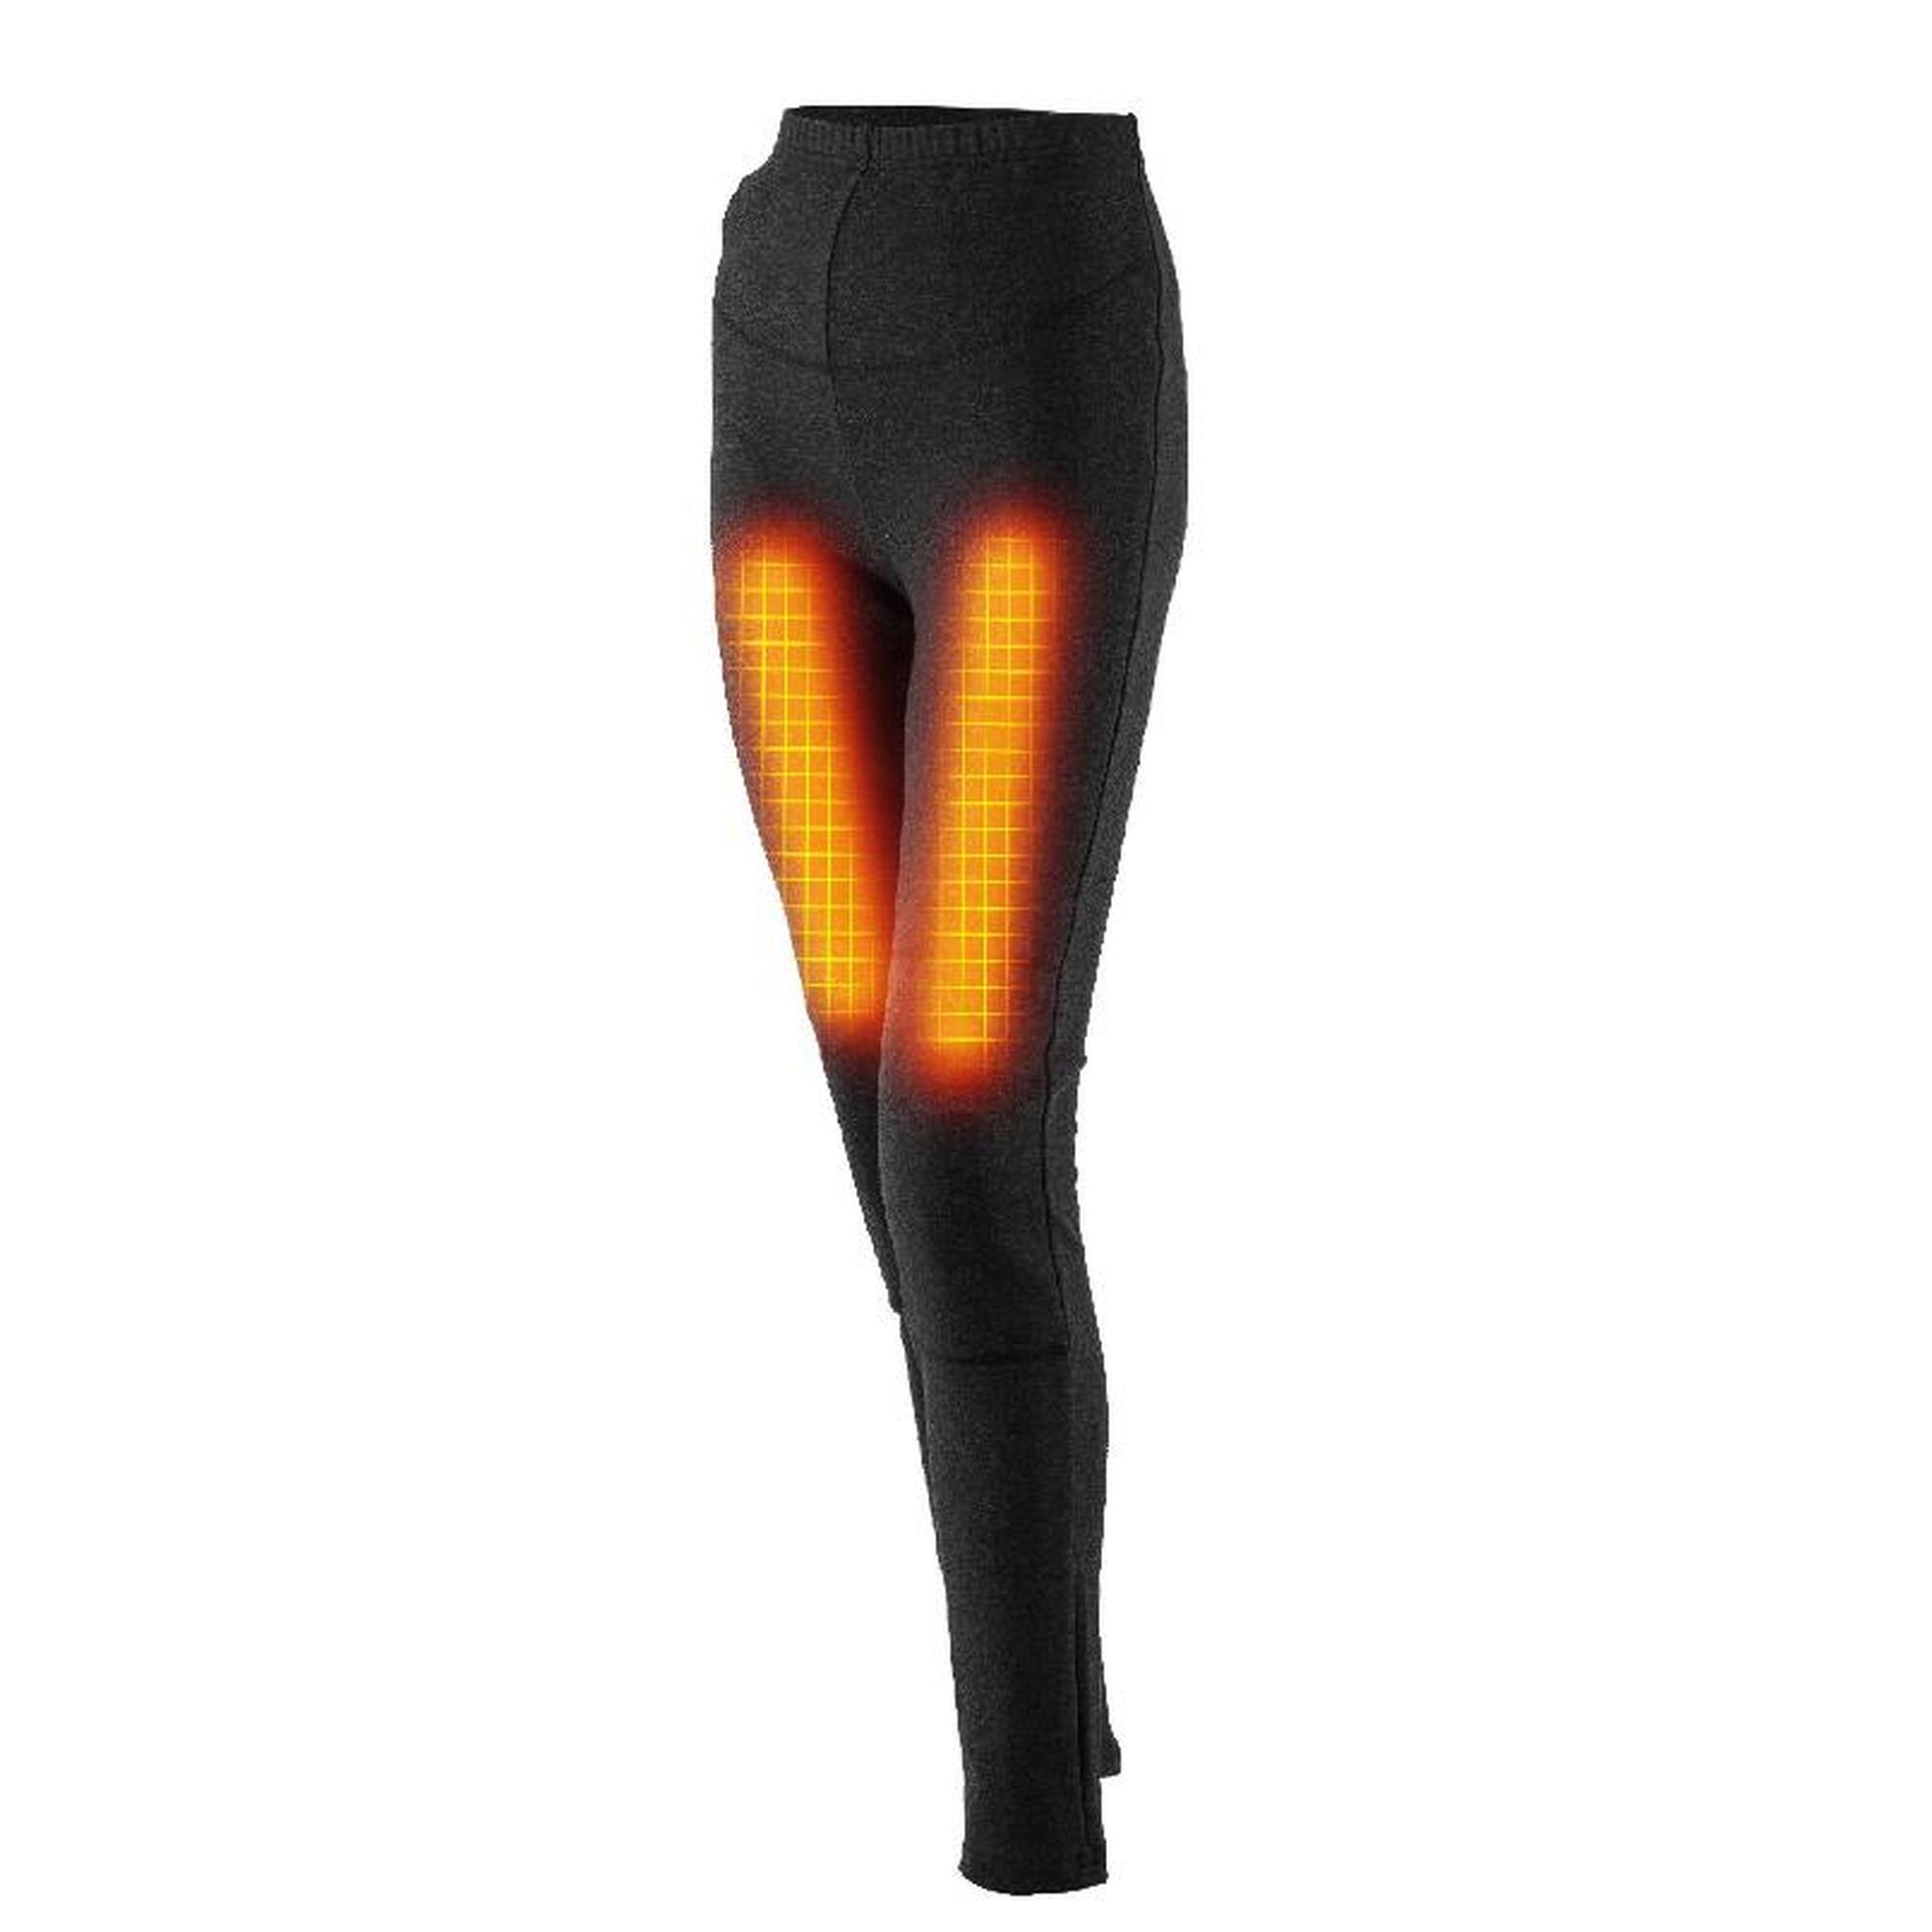 Pantalones calefactables - Dual Heating